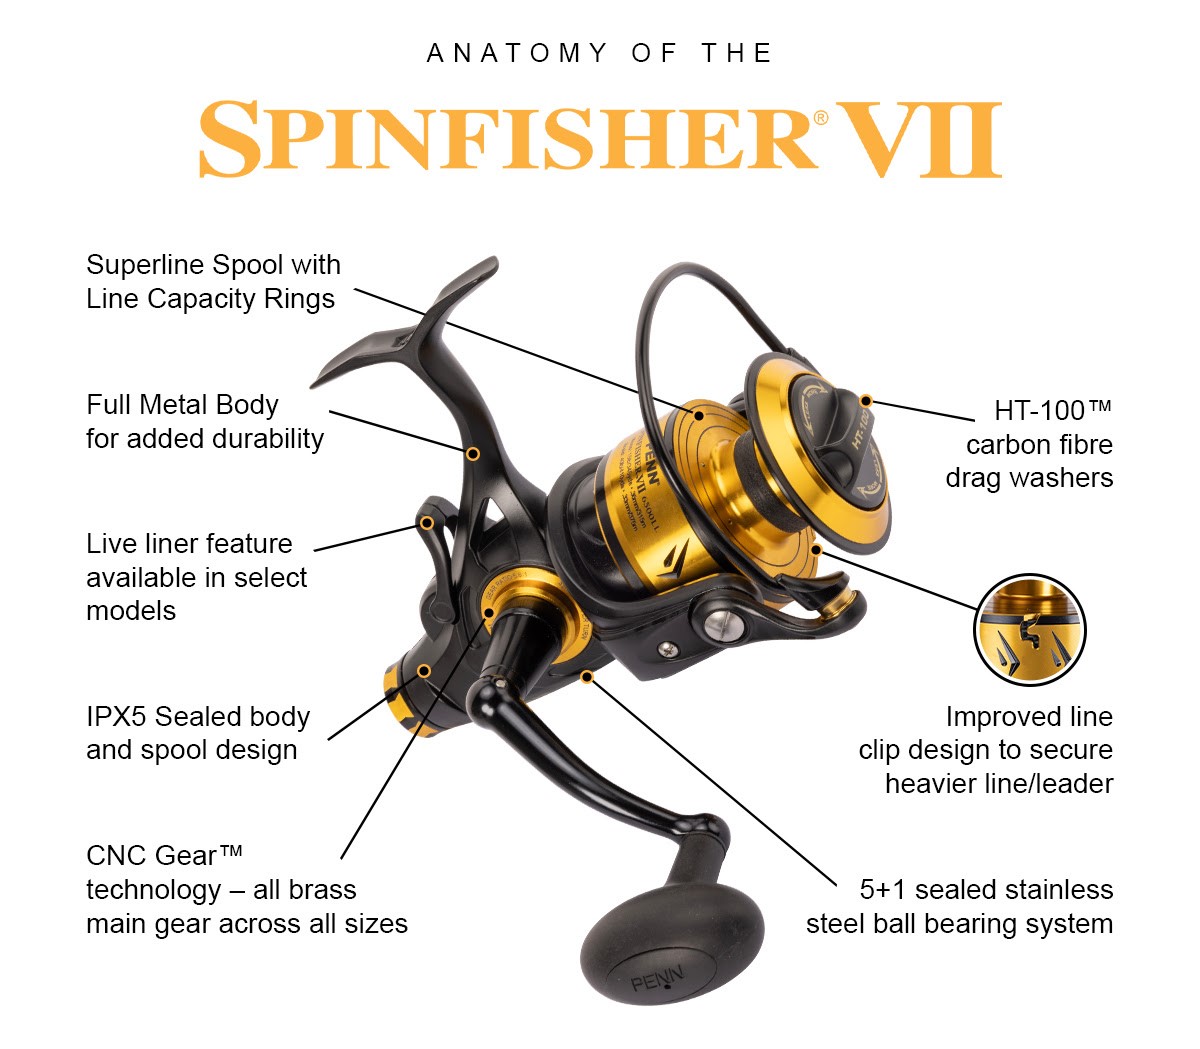 Penn Spinfisher VII Live Liner SSVII6500LL Spinning Reel